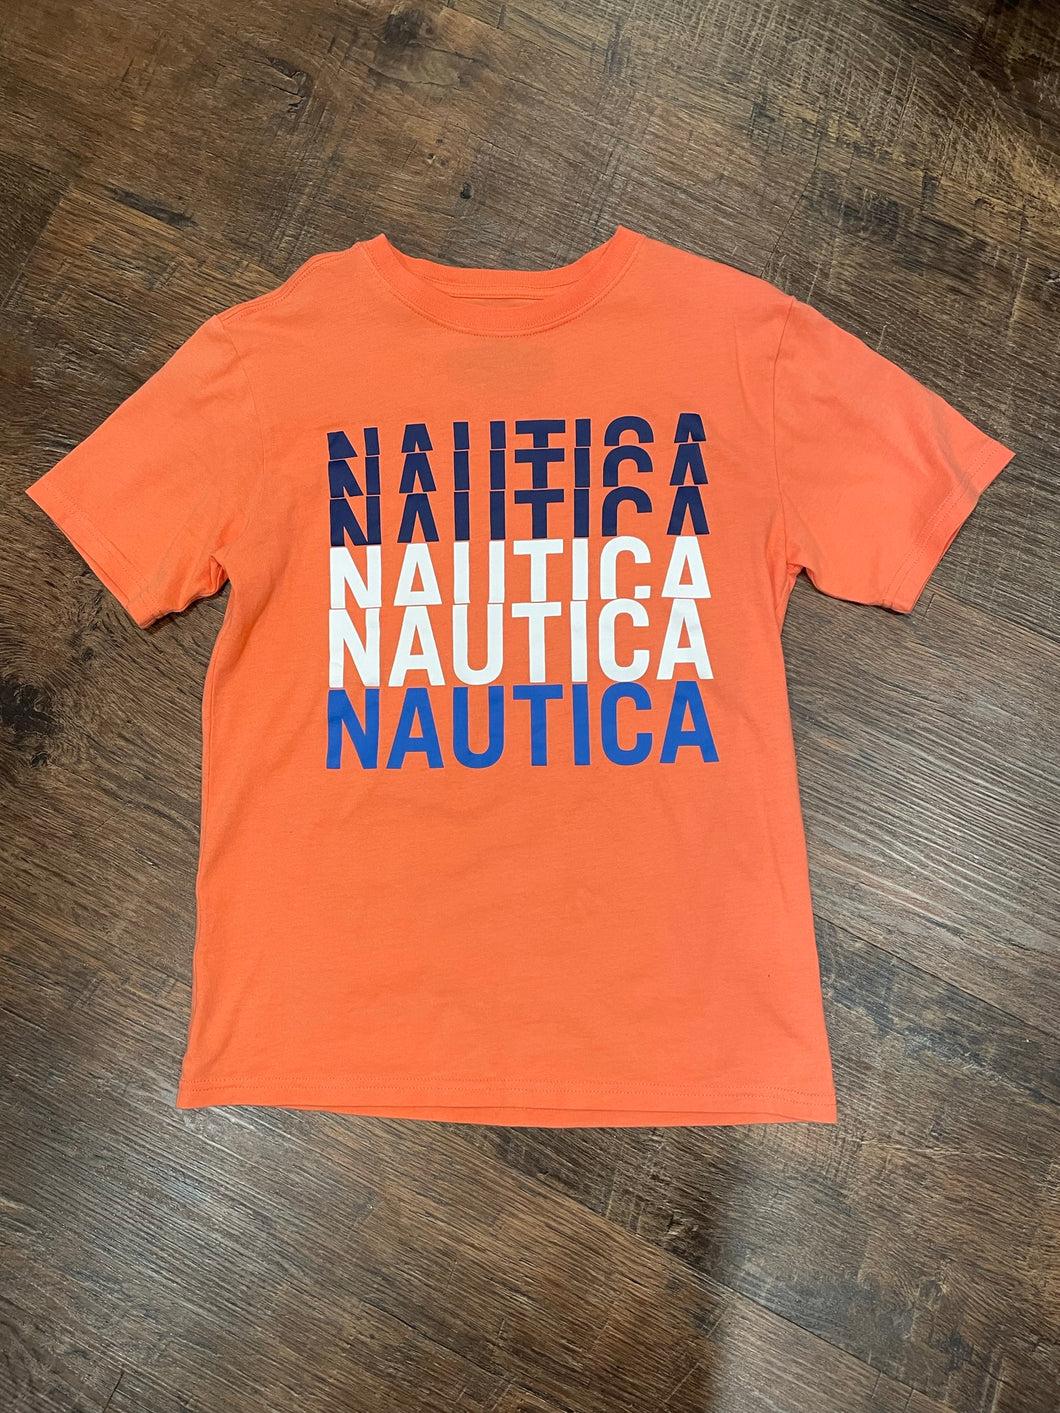 Nautica peach shirt 10/12 10